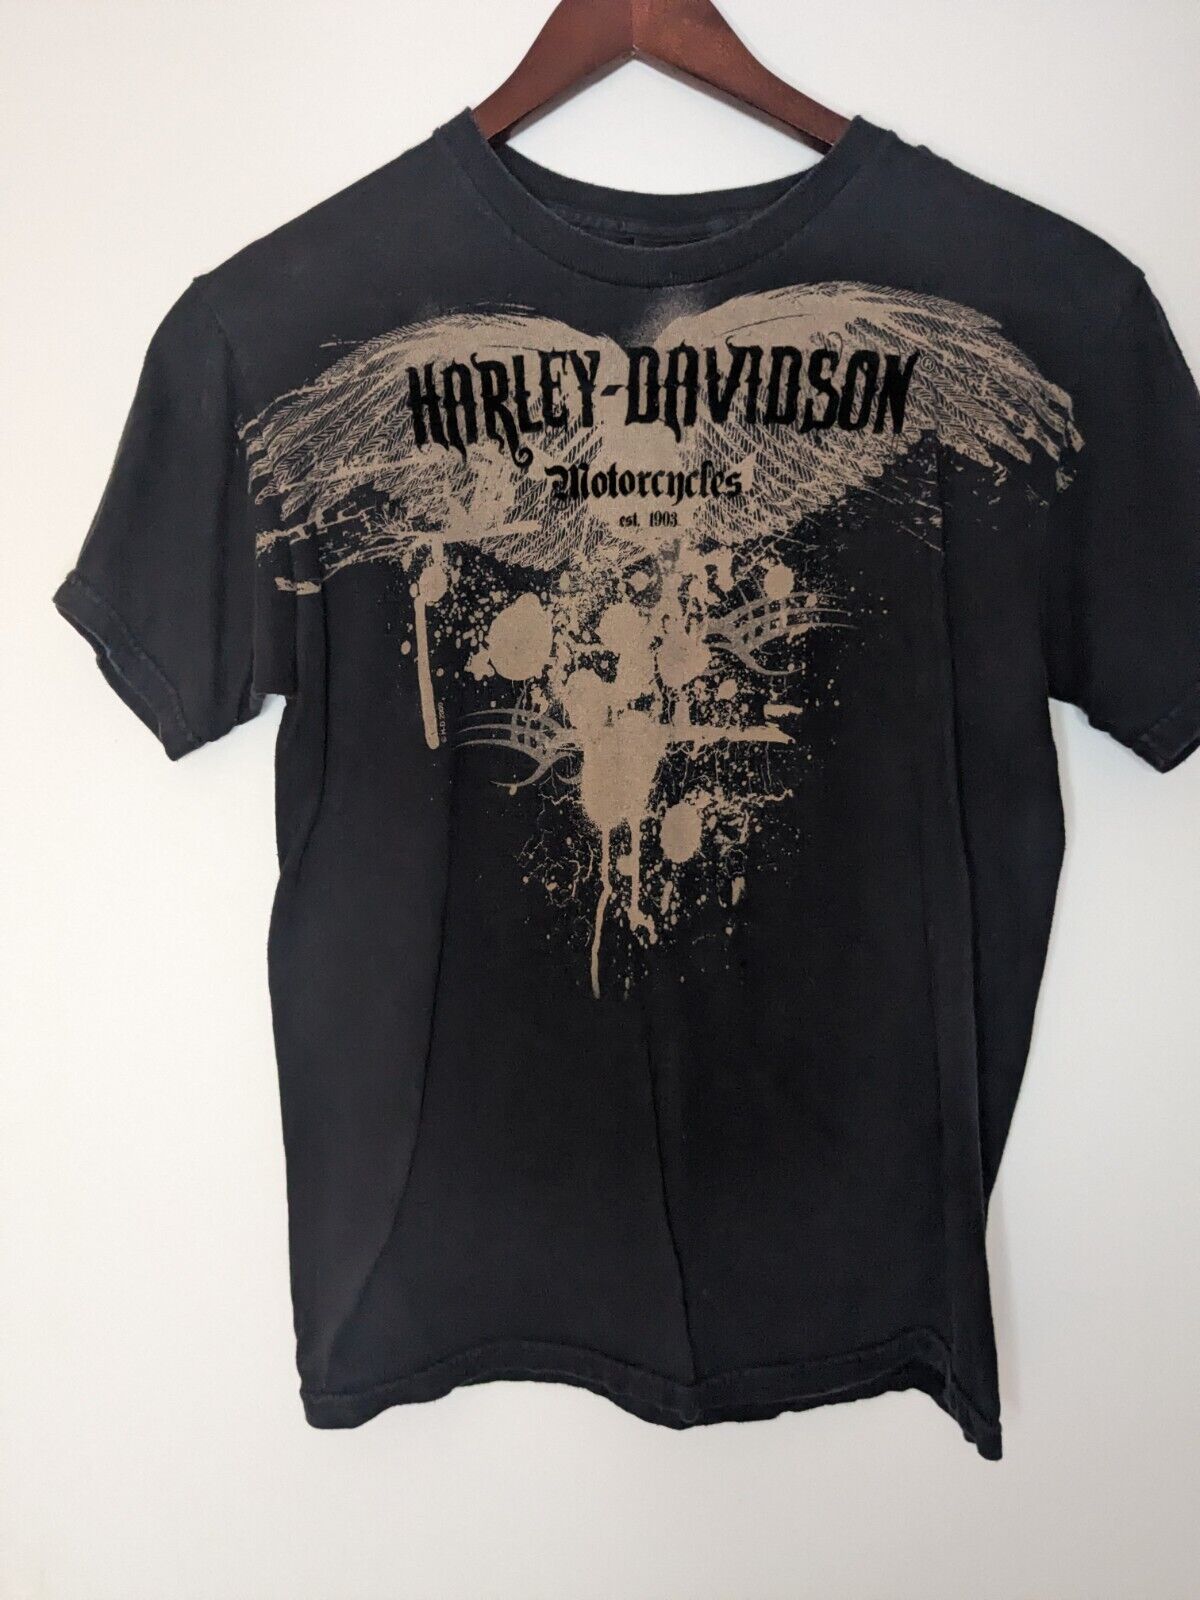 Harley Davidson Women's T-shirt Black Las Vegas Nevada Size Small